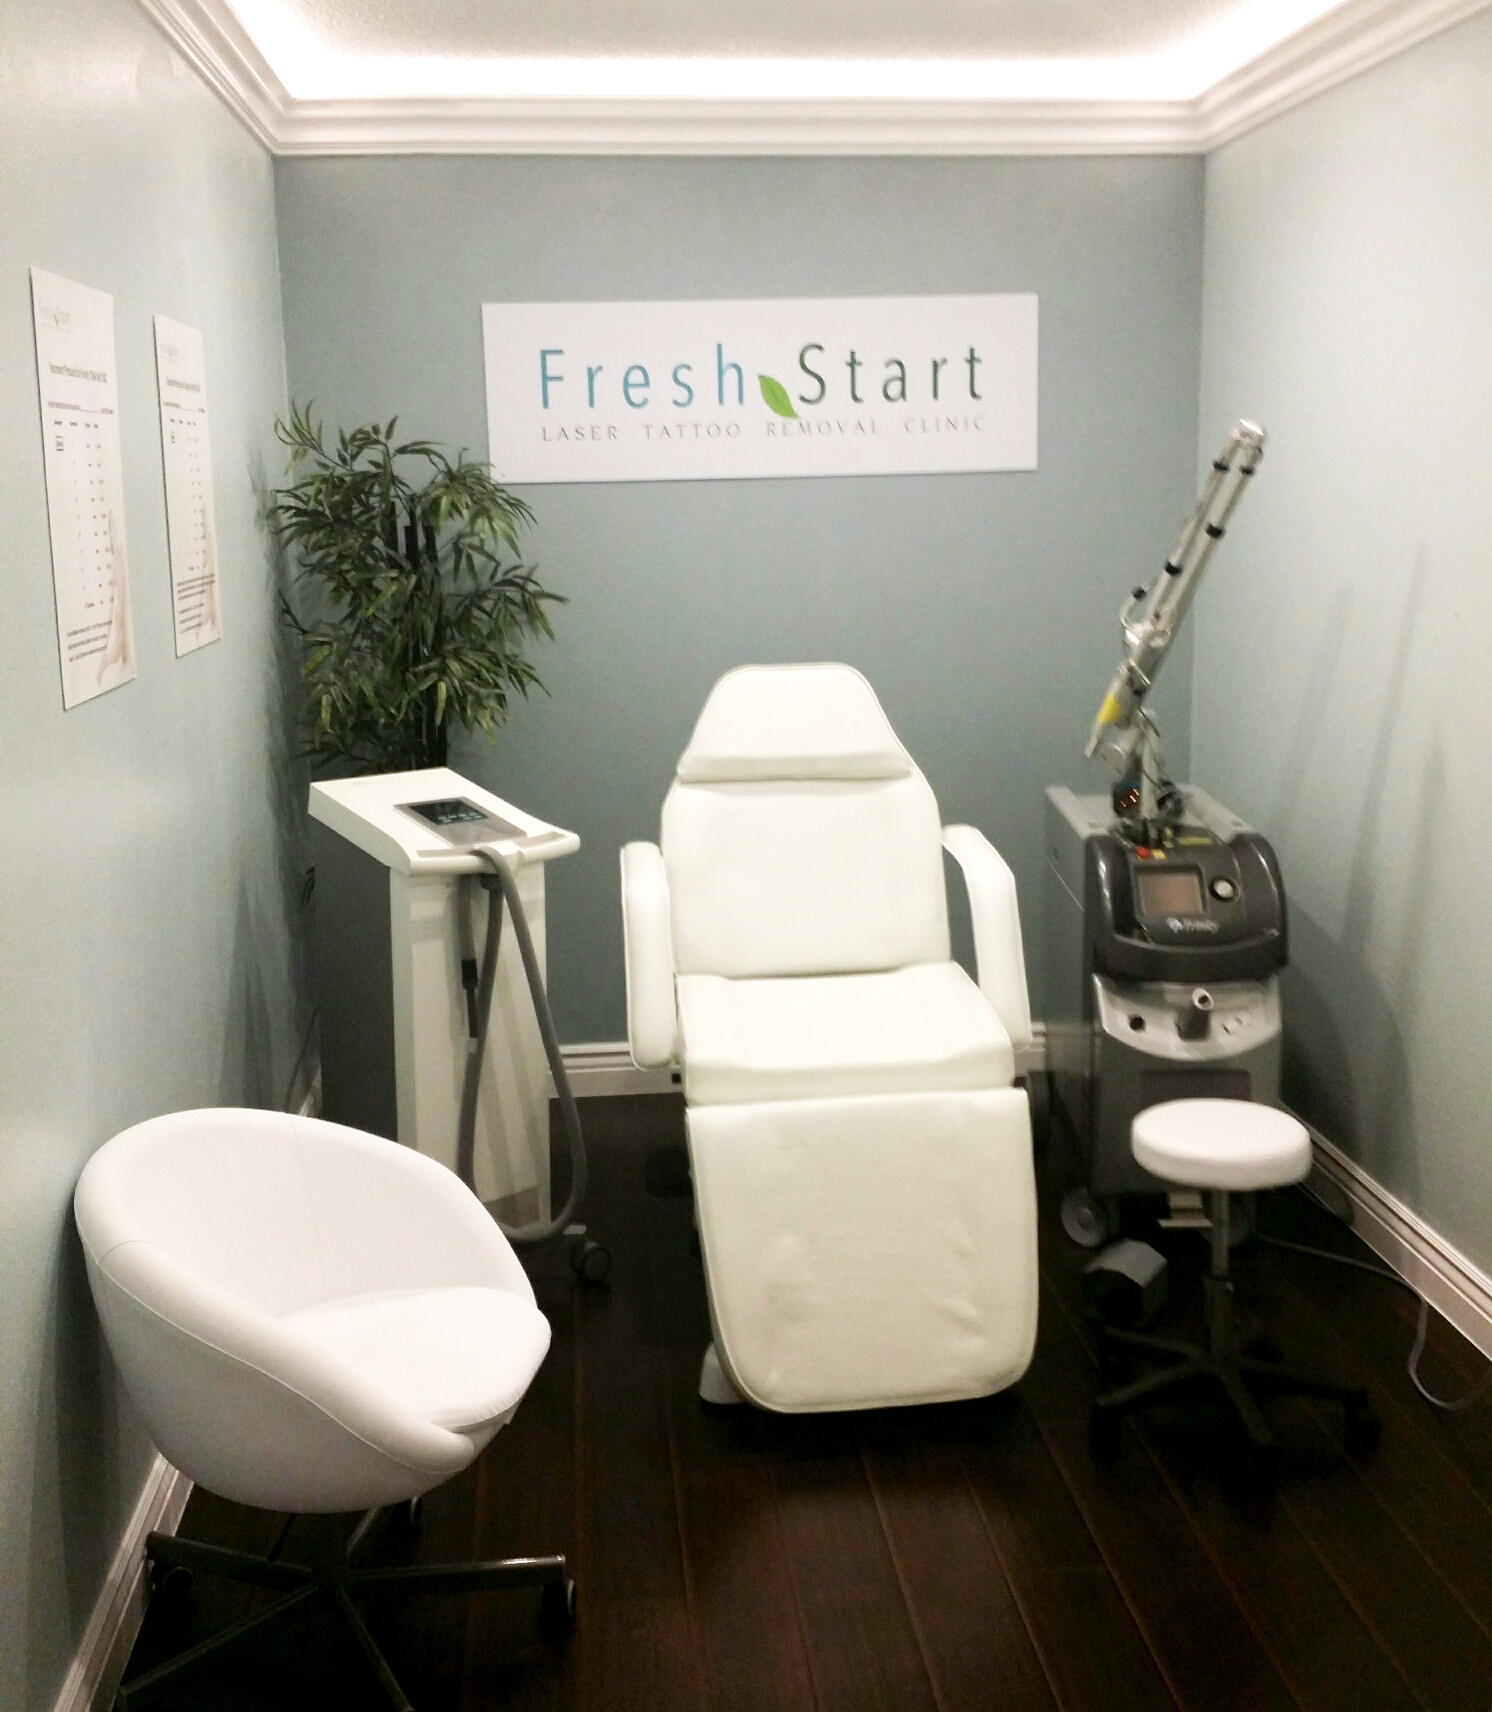 Fresh Start Laser Tattoo Removal Clinic, Austin Texas (TX ...